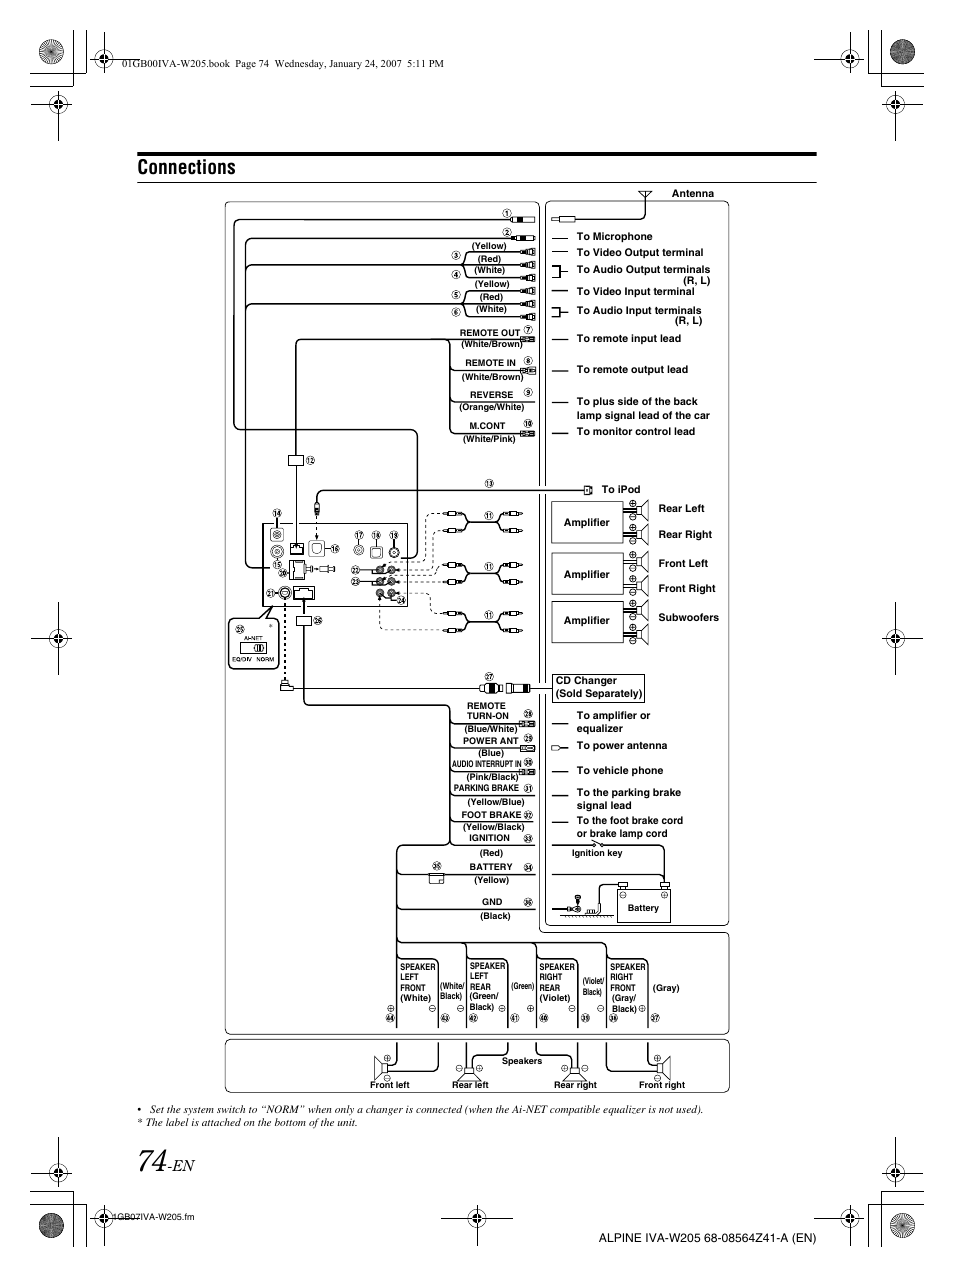 ALPINE IVA-W205 MANUAL PDF